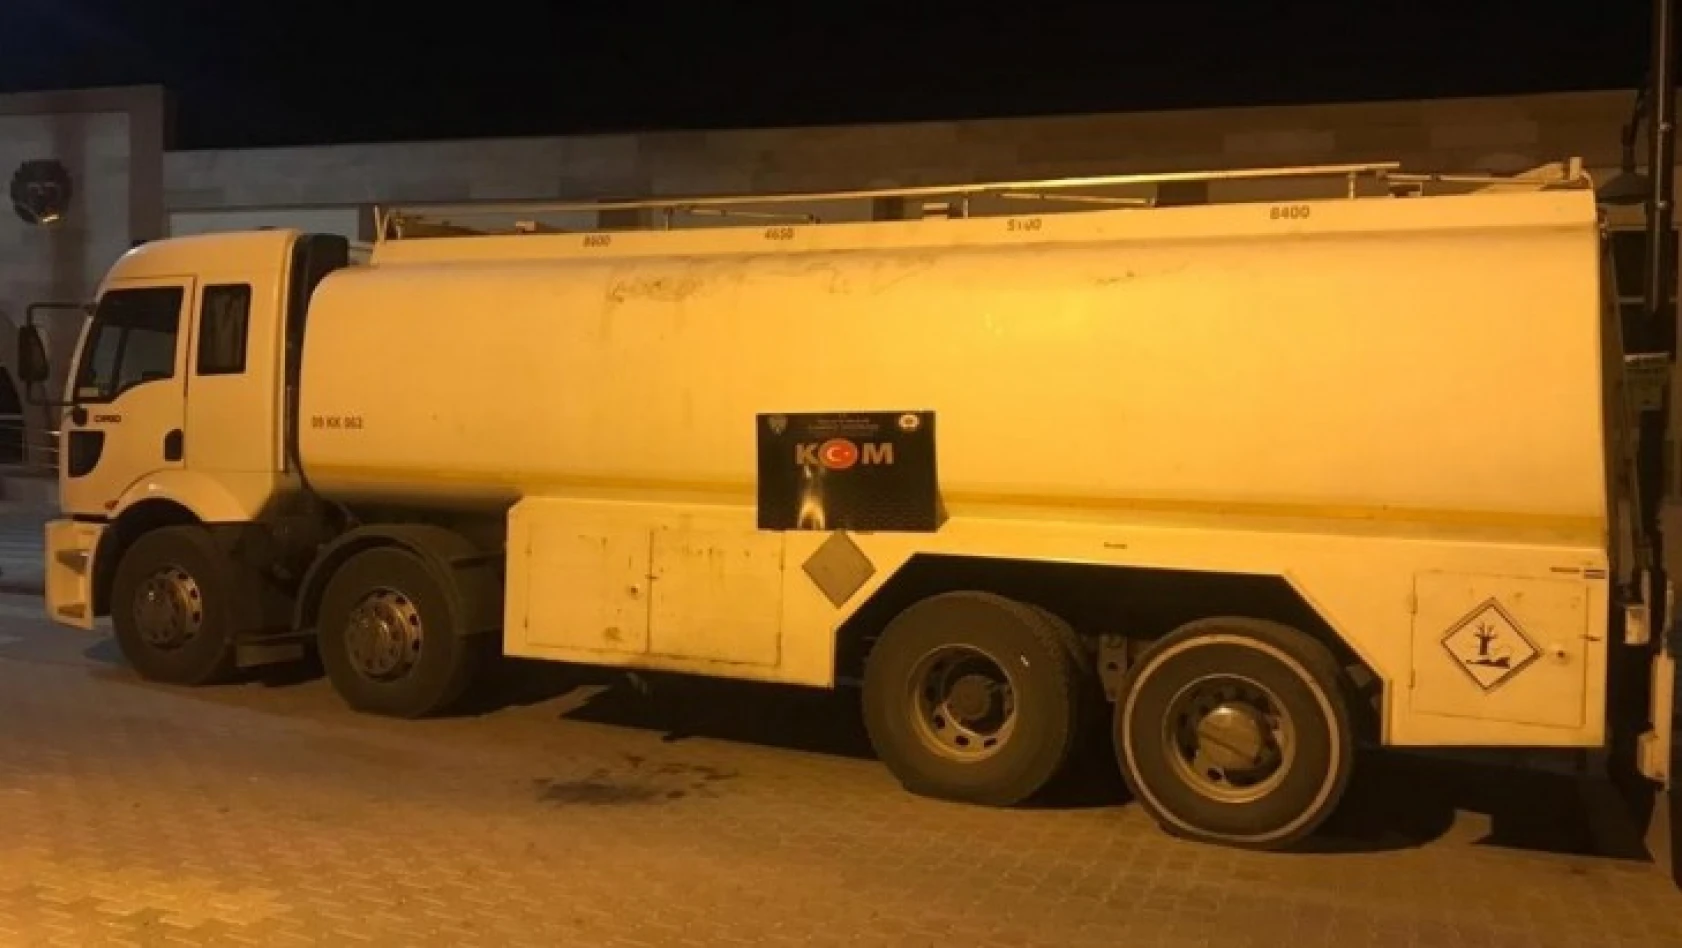 Malatya'da 26 bin 750 litre kaçak motorin ele geçirildi